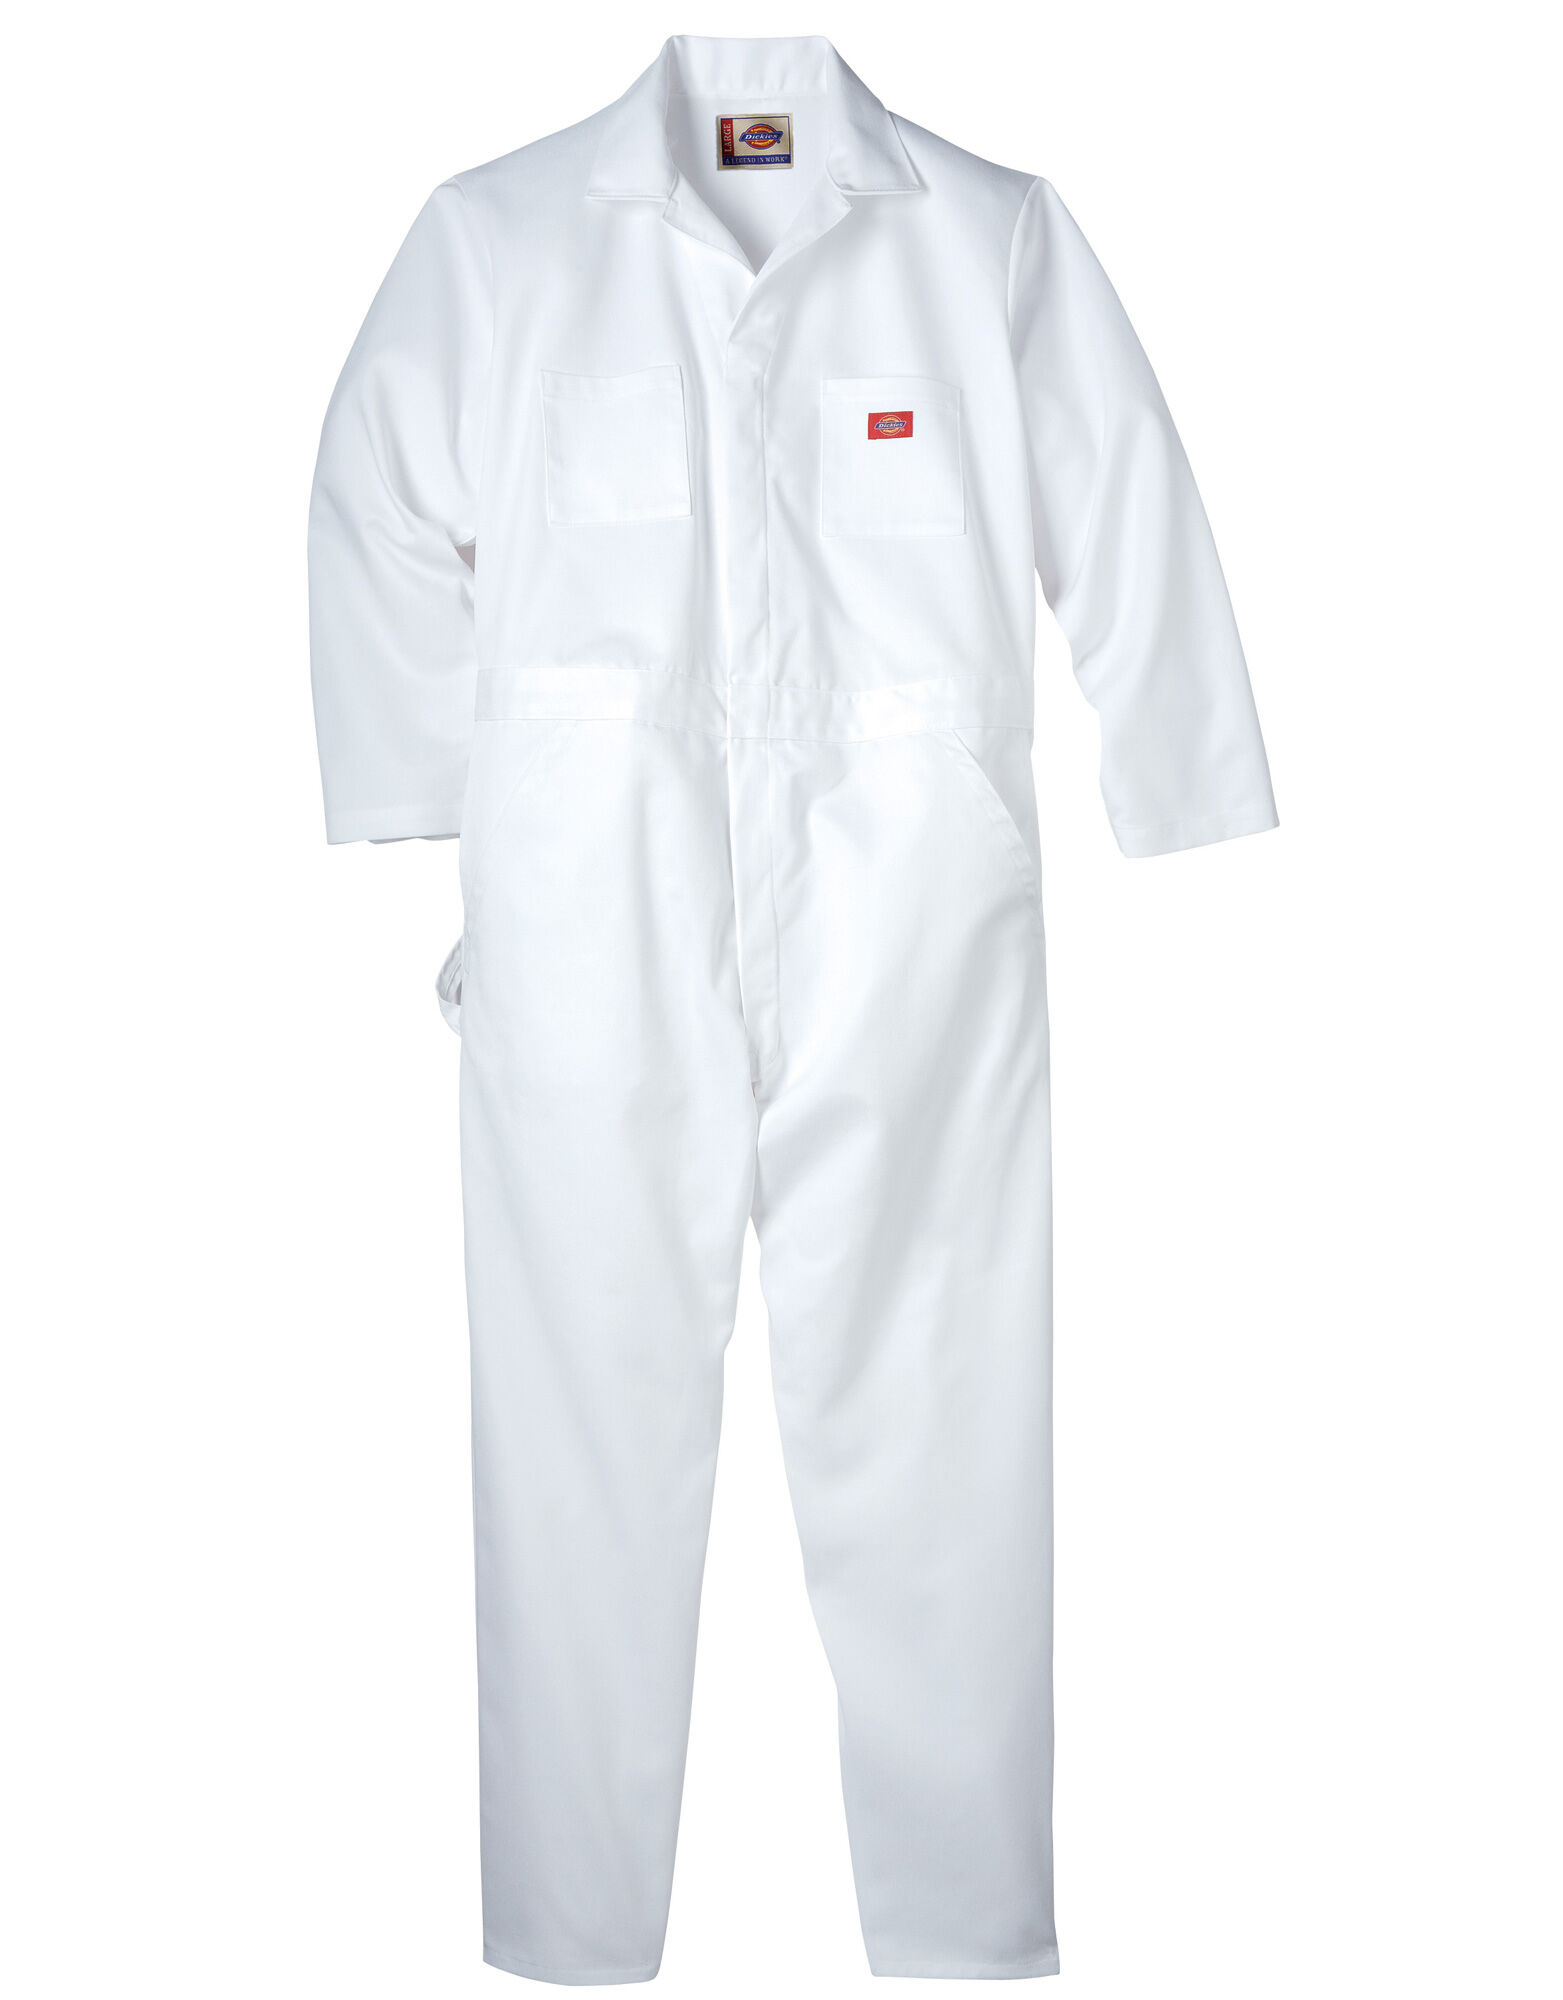 white long overalls